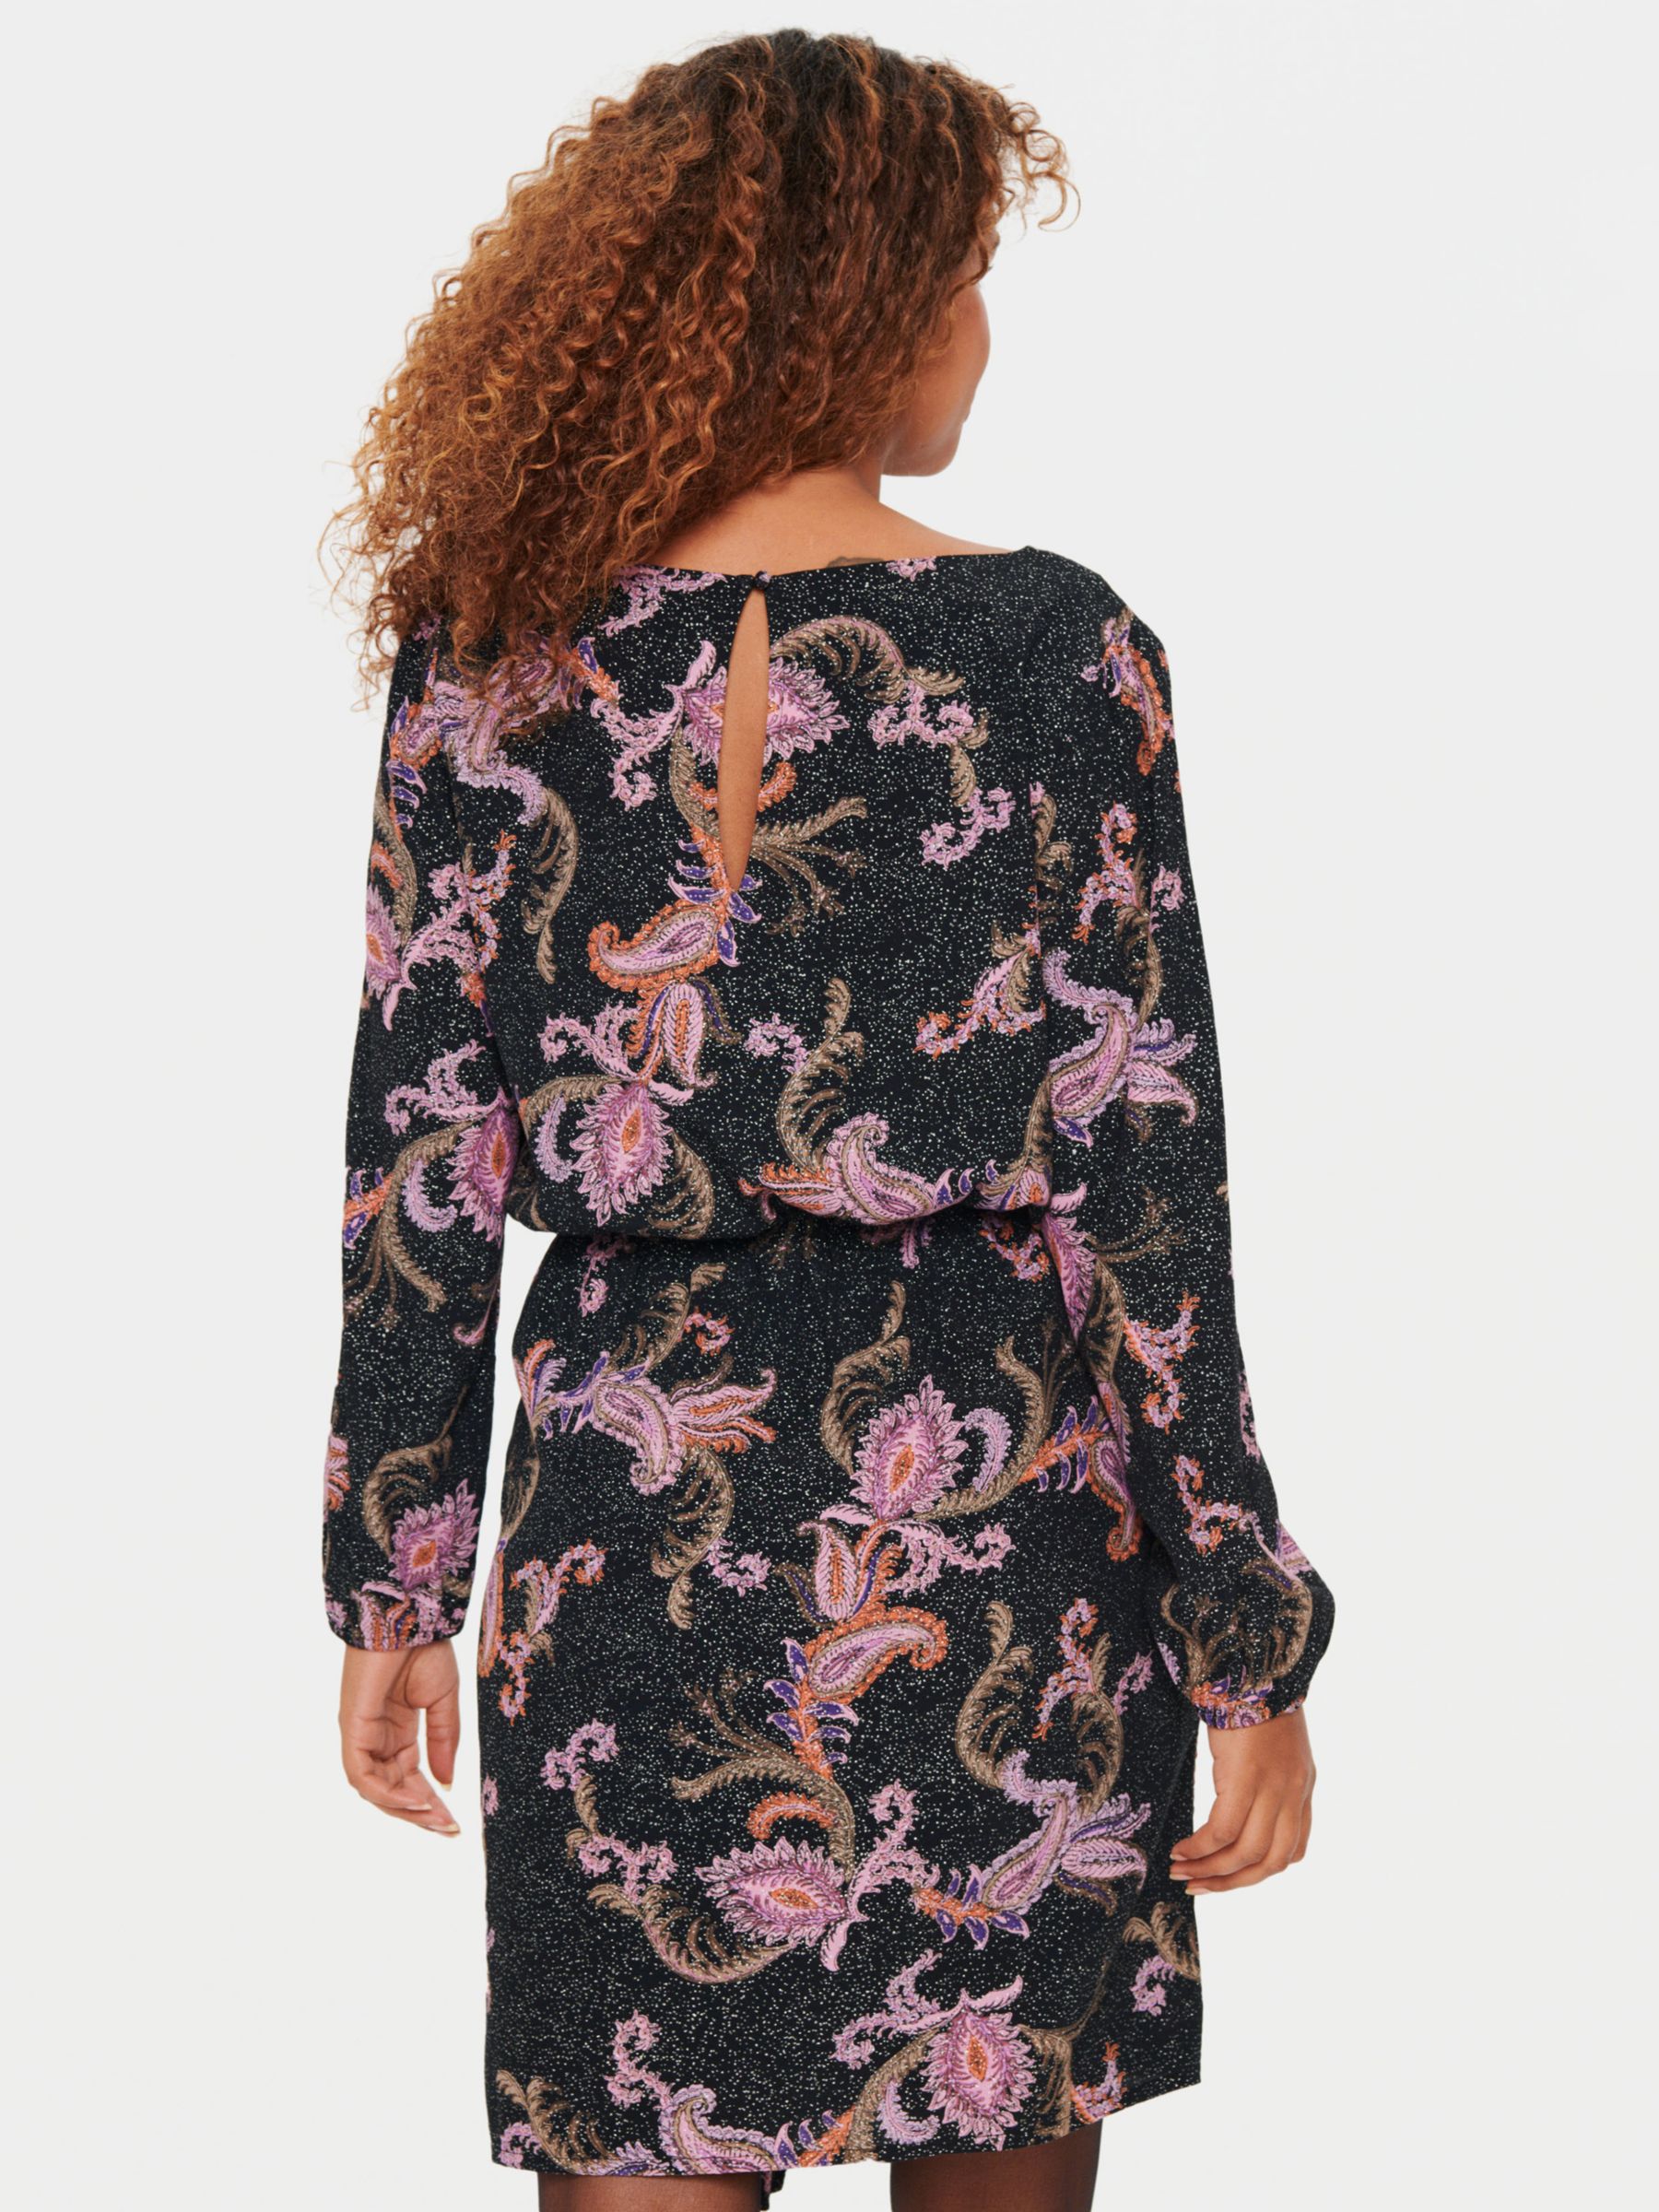 Saint Tropez Benina Paisley Print Dress, Black/Multi, XS